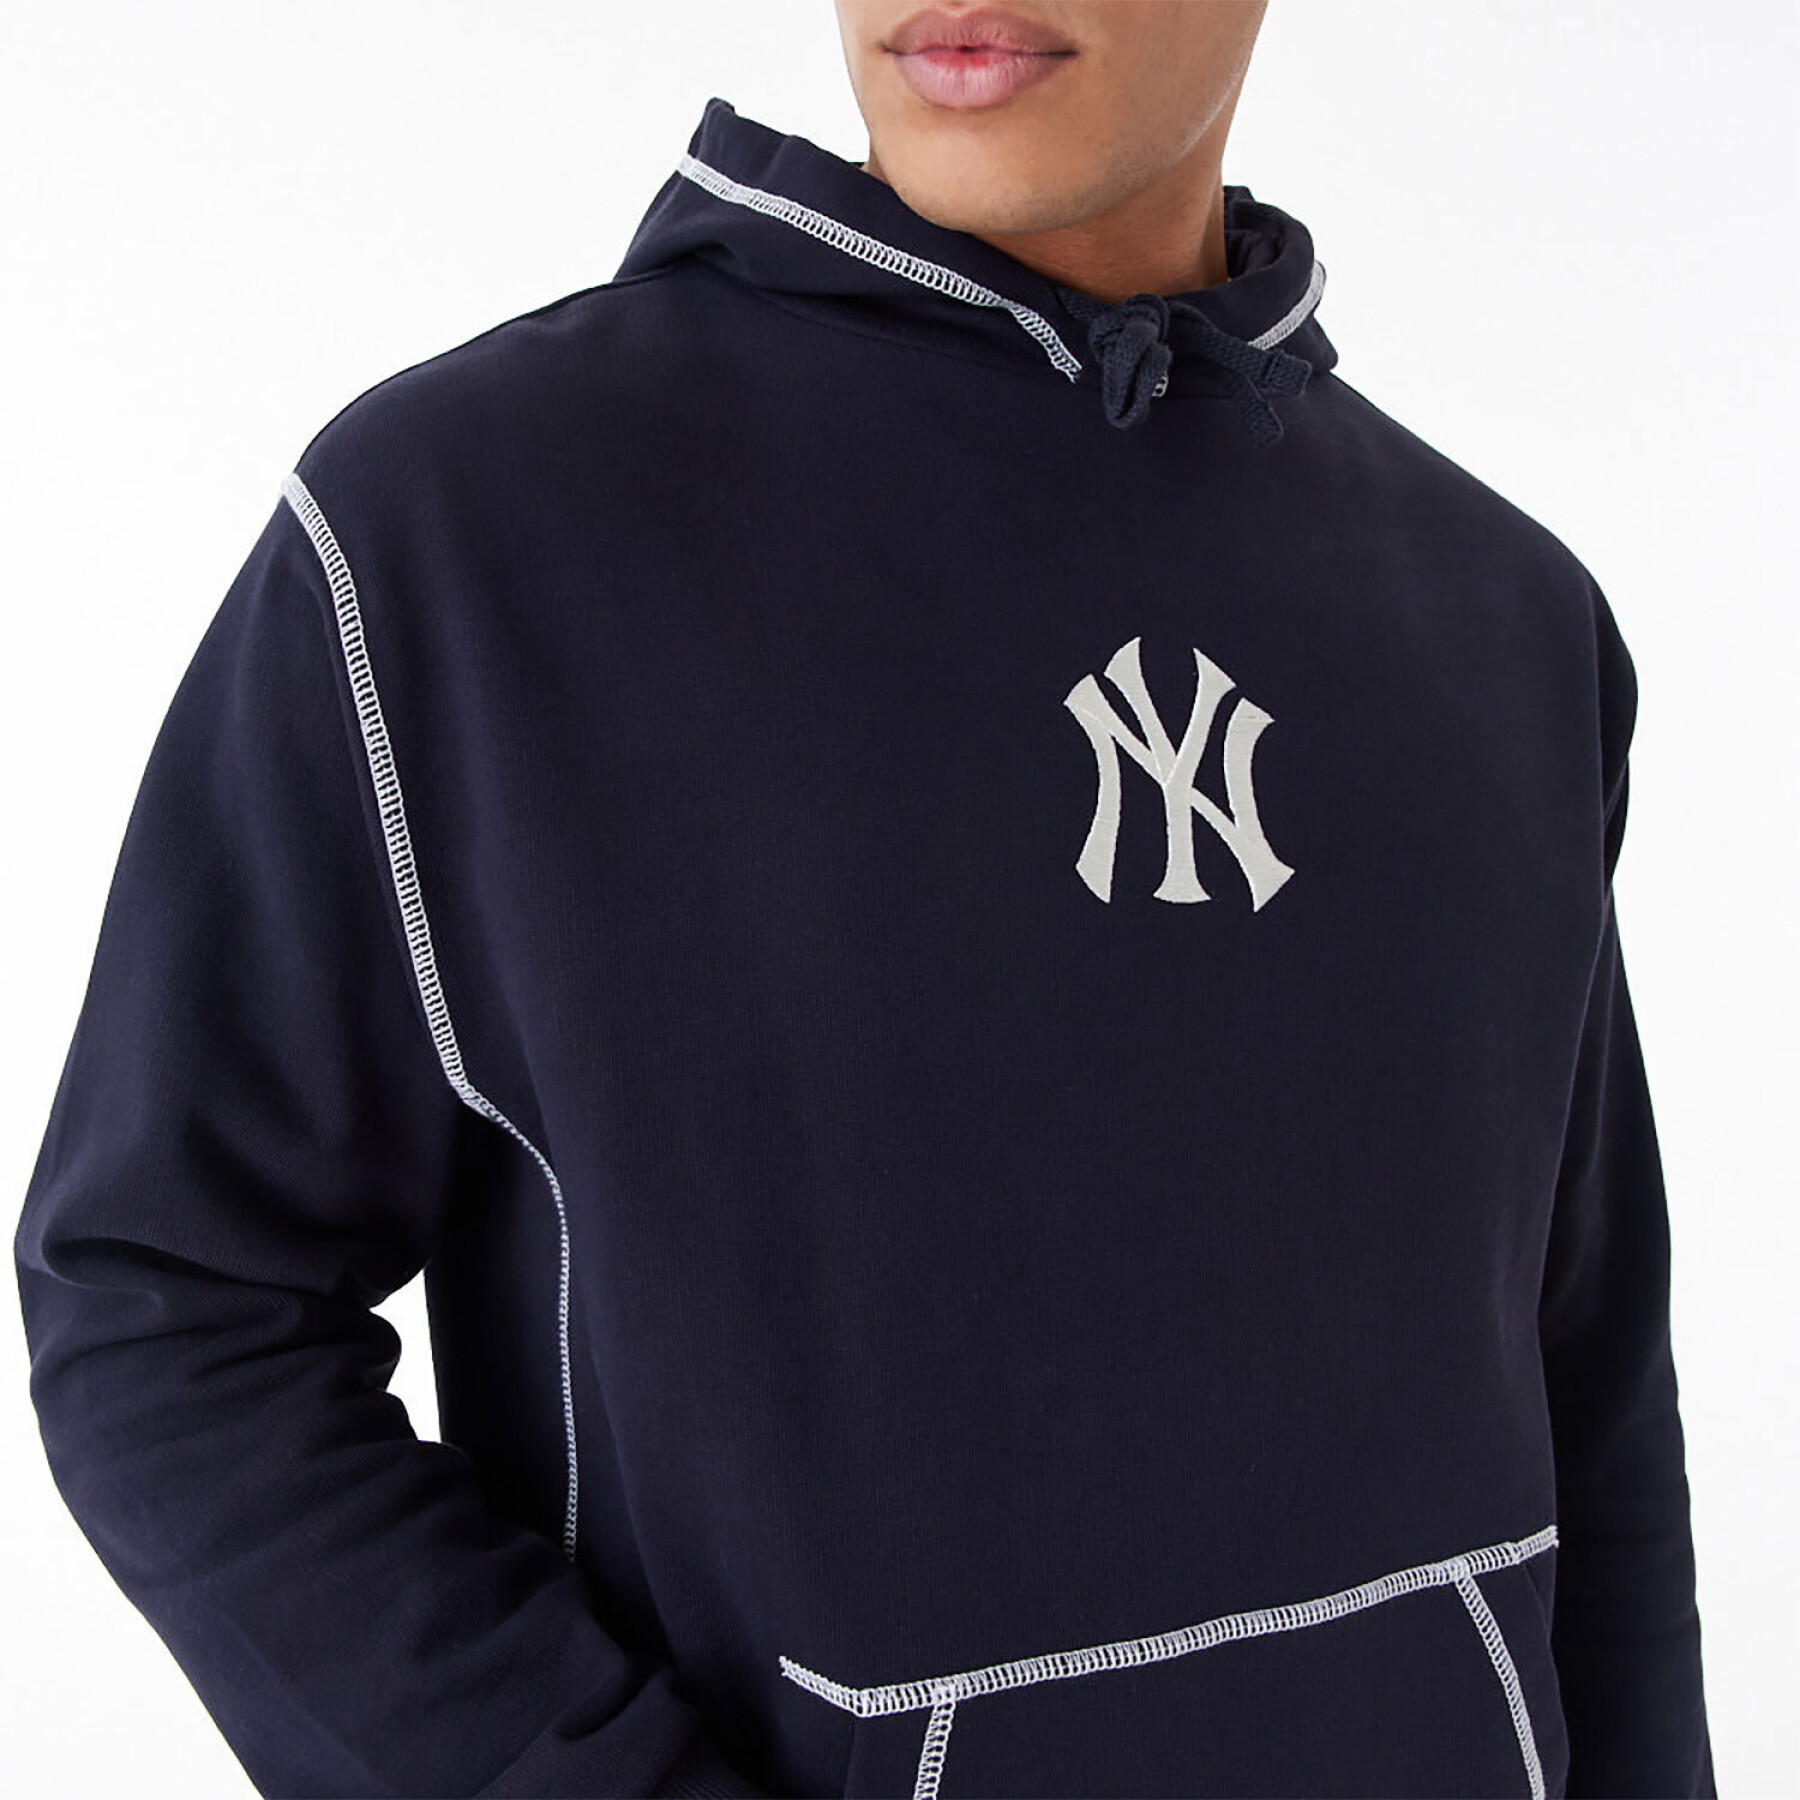 Sudadera con capucha New York Yankees MLB World Series